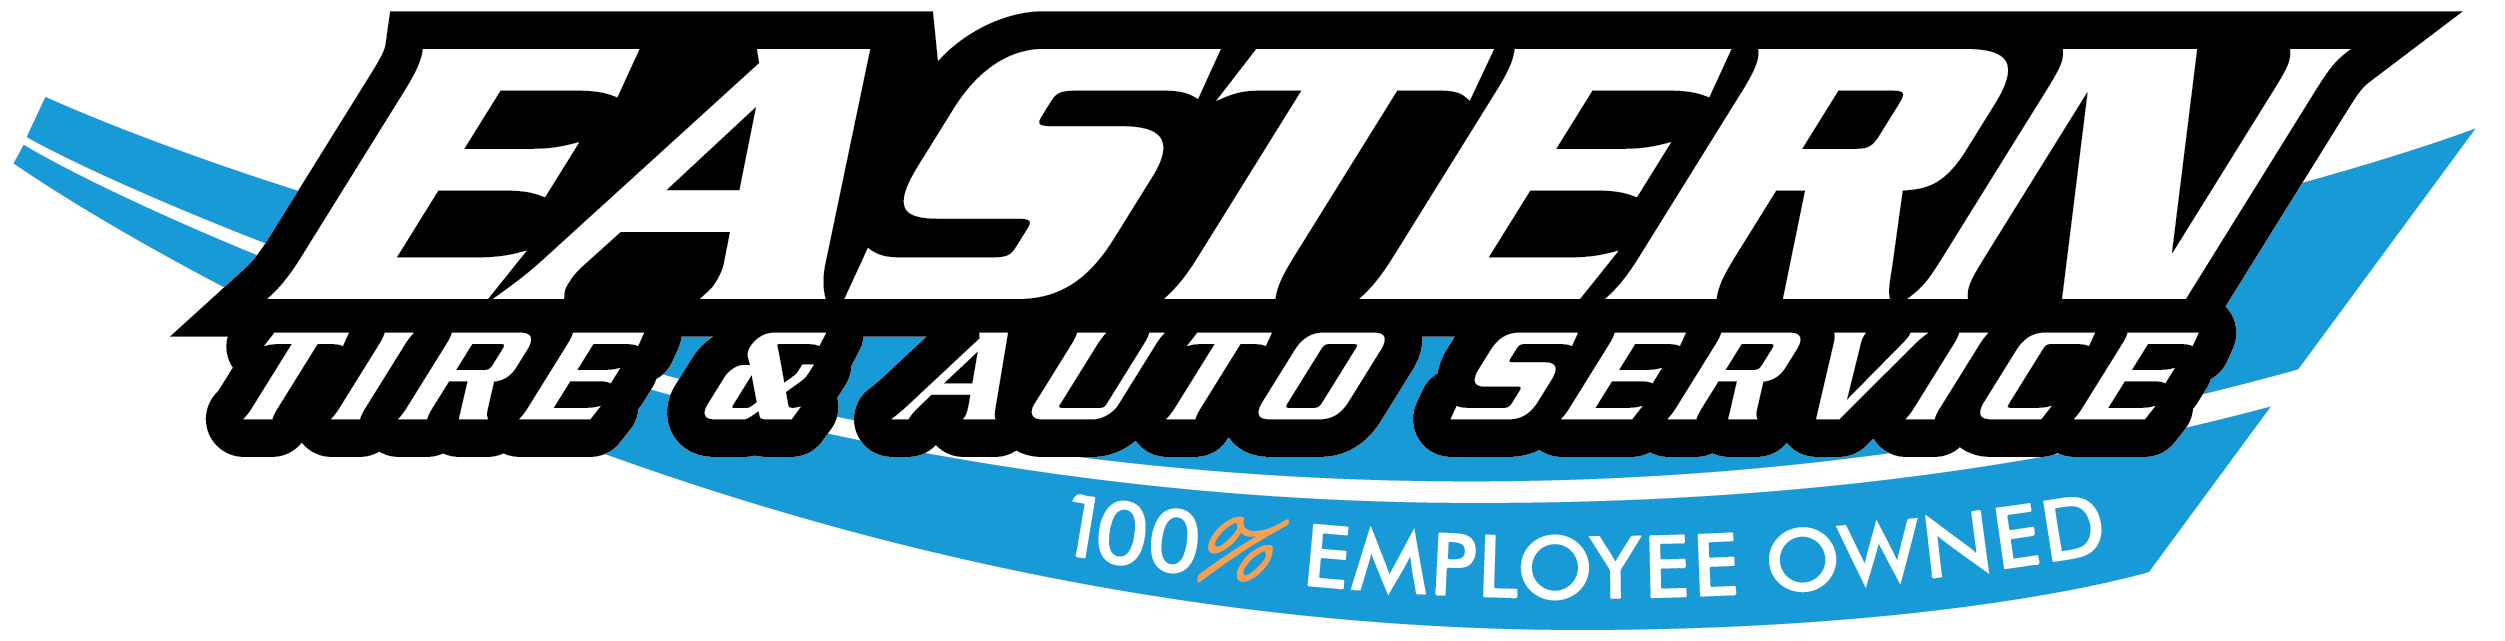 Eastern Tire & Auto Service Logo